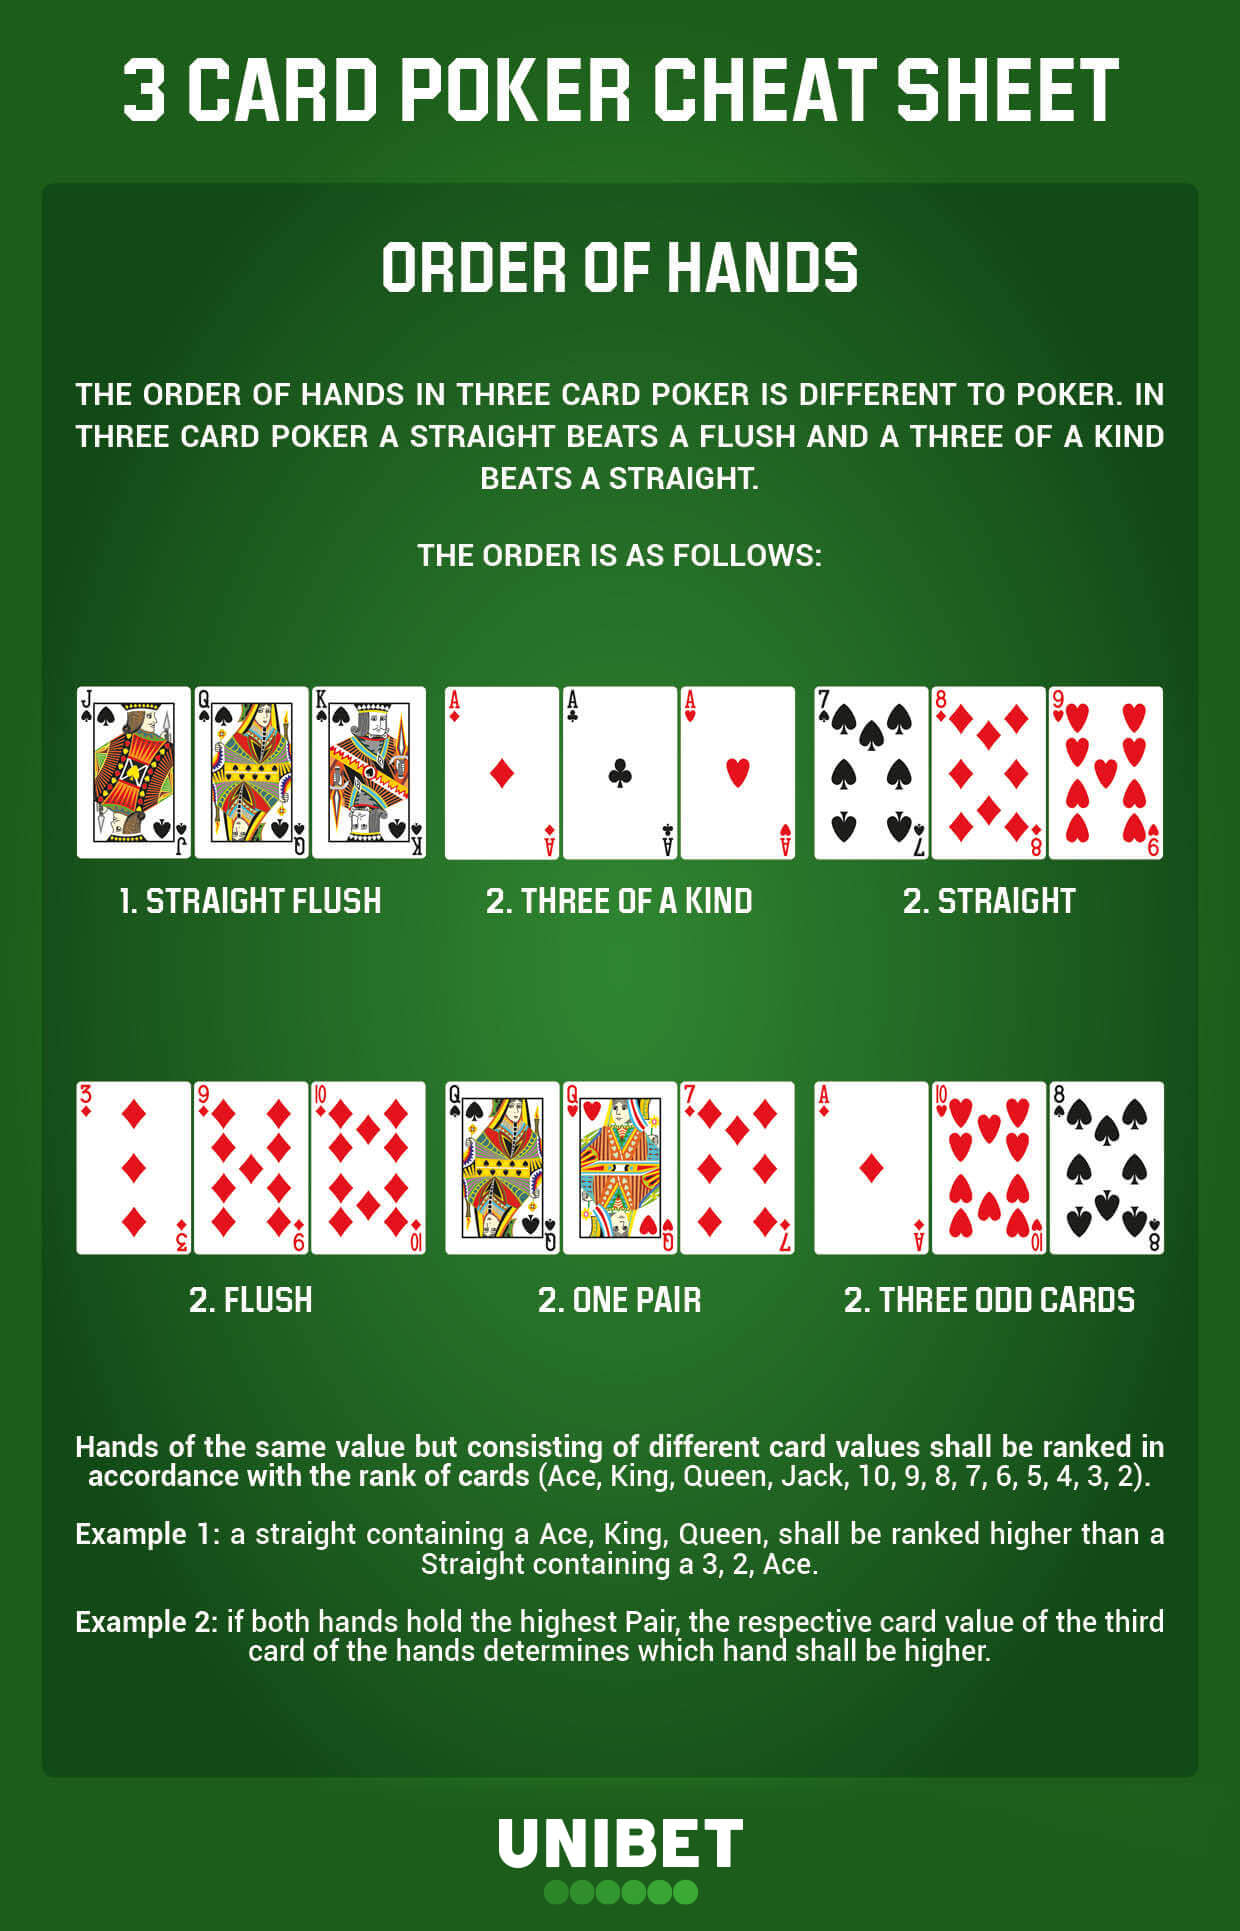 3 card poker odds calculator